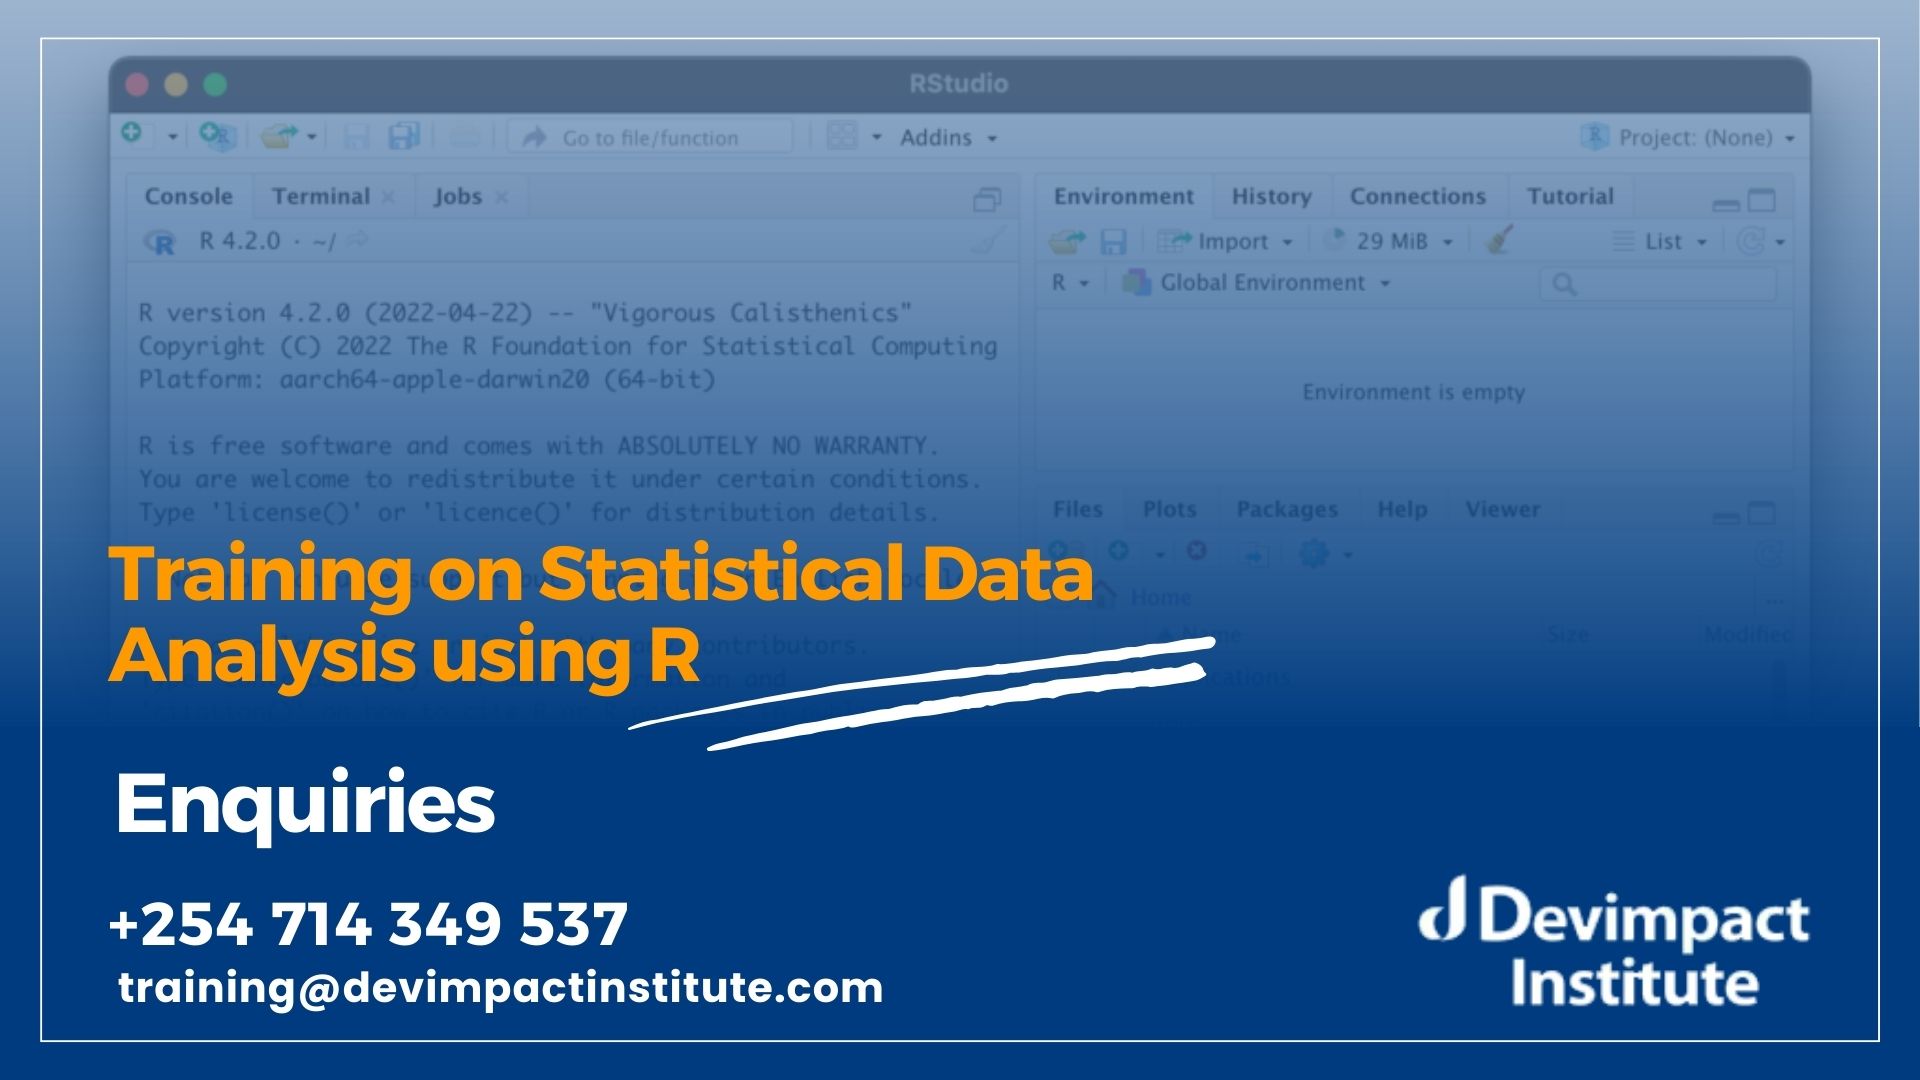 Training on Statistical Data Analysis using R, Devimpact Institute, Nairobi, Kenya